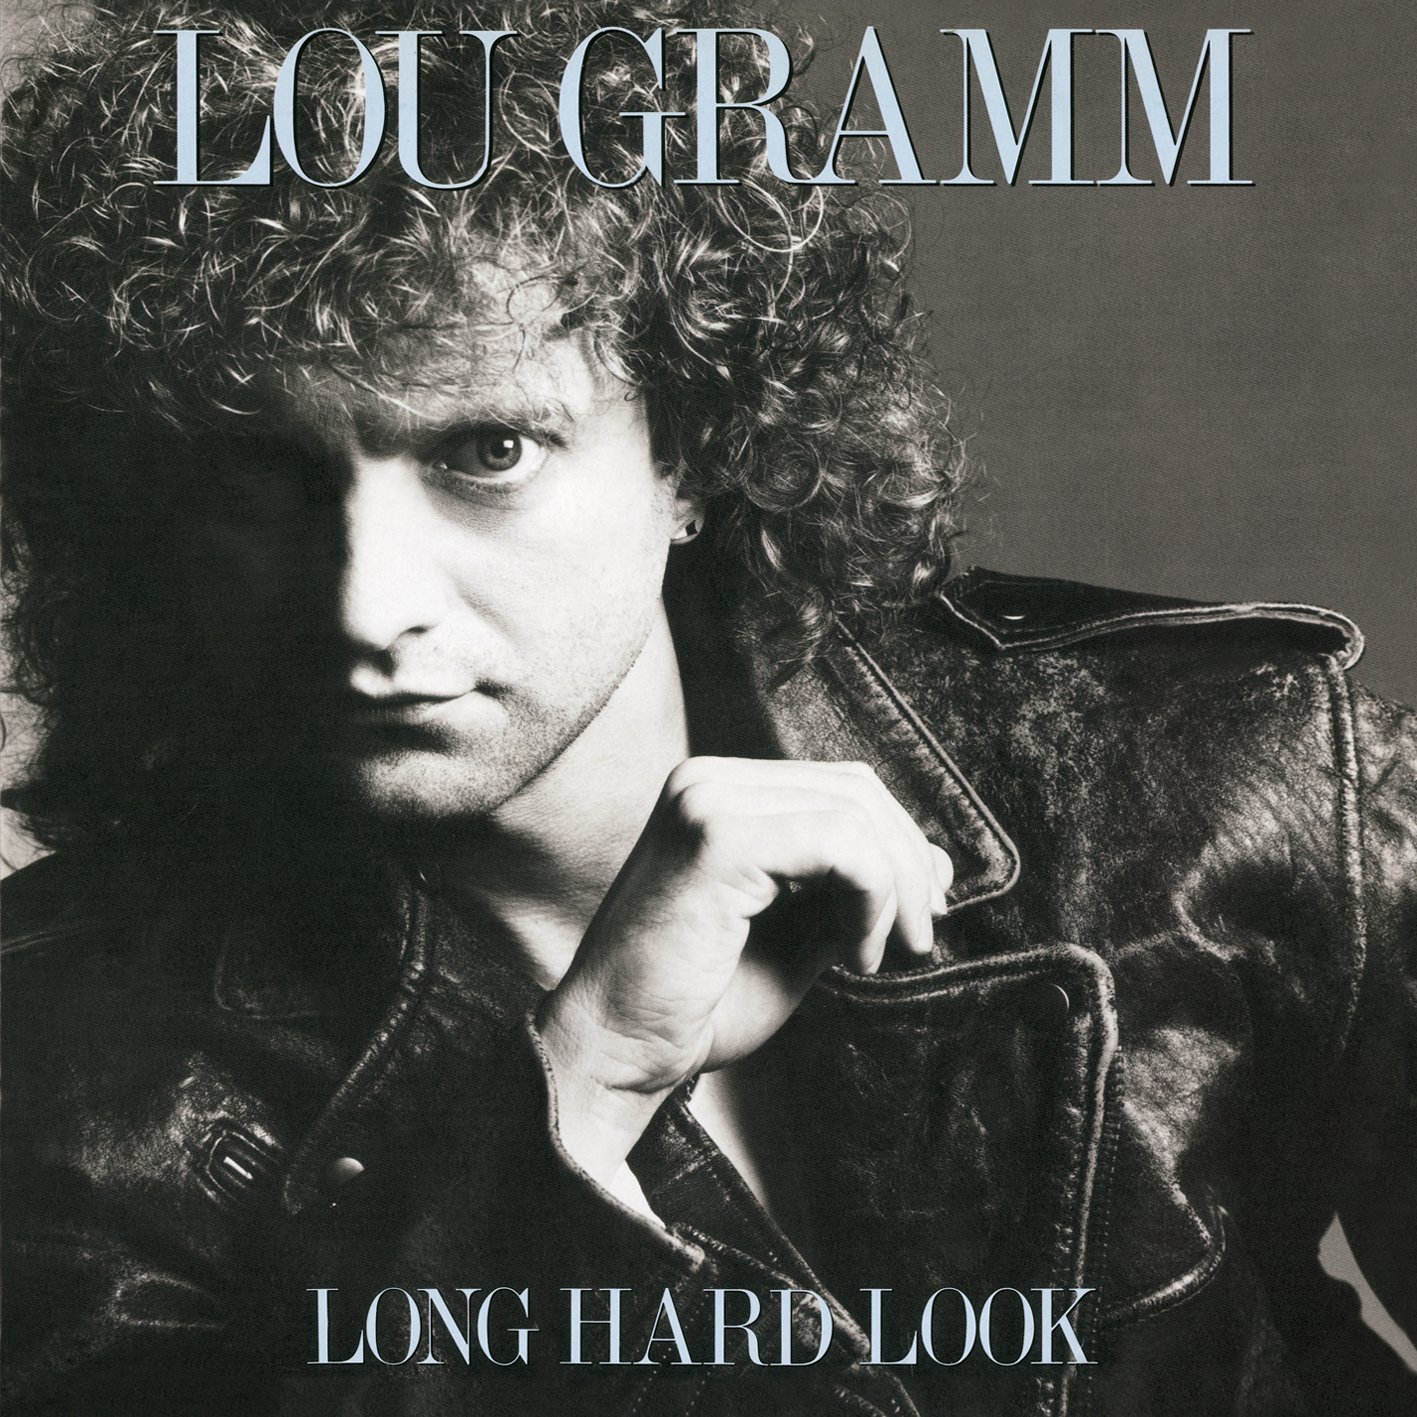 Lou Gramm - Long Hard Look (1989) FLAC Download